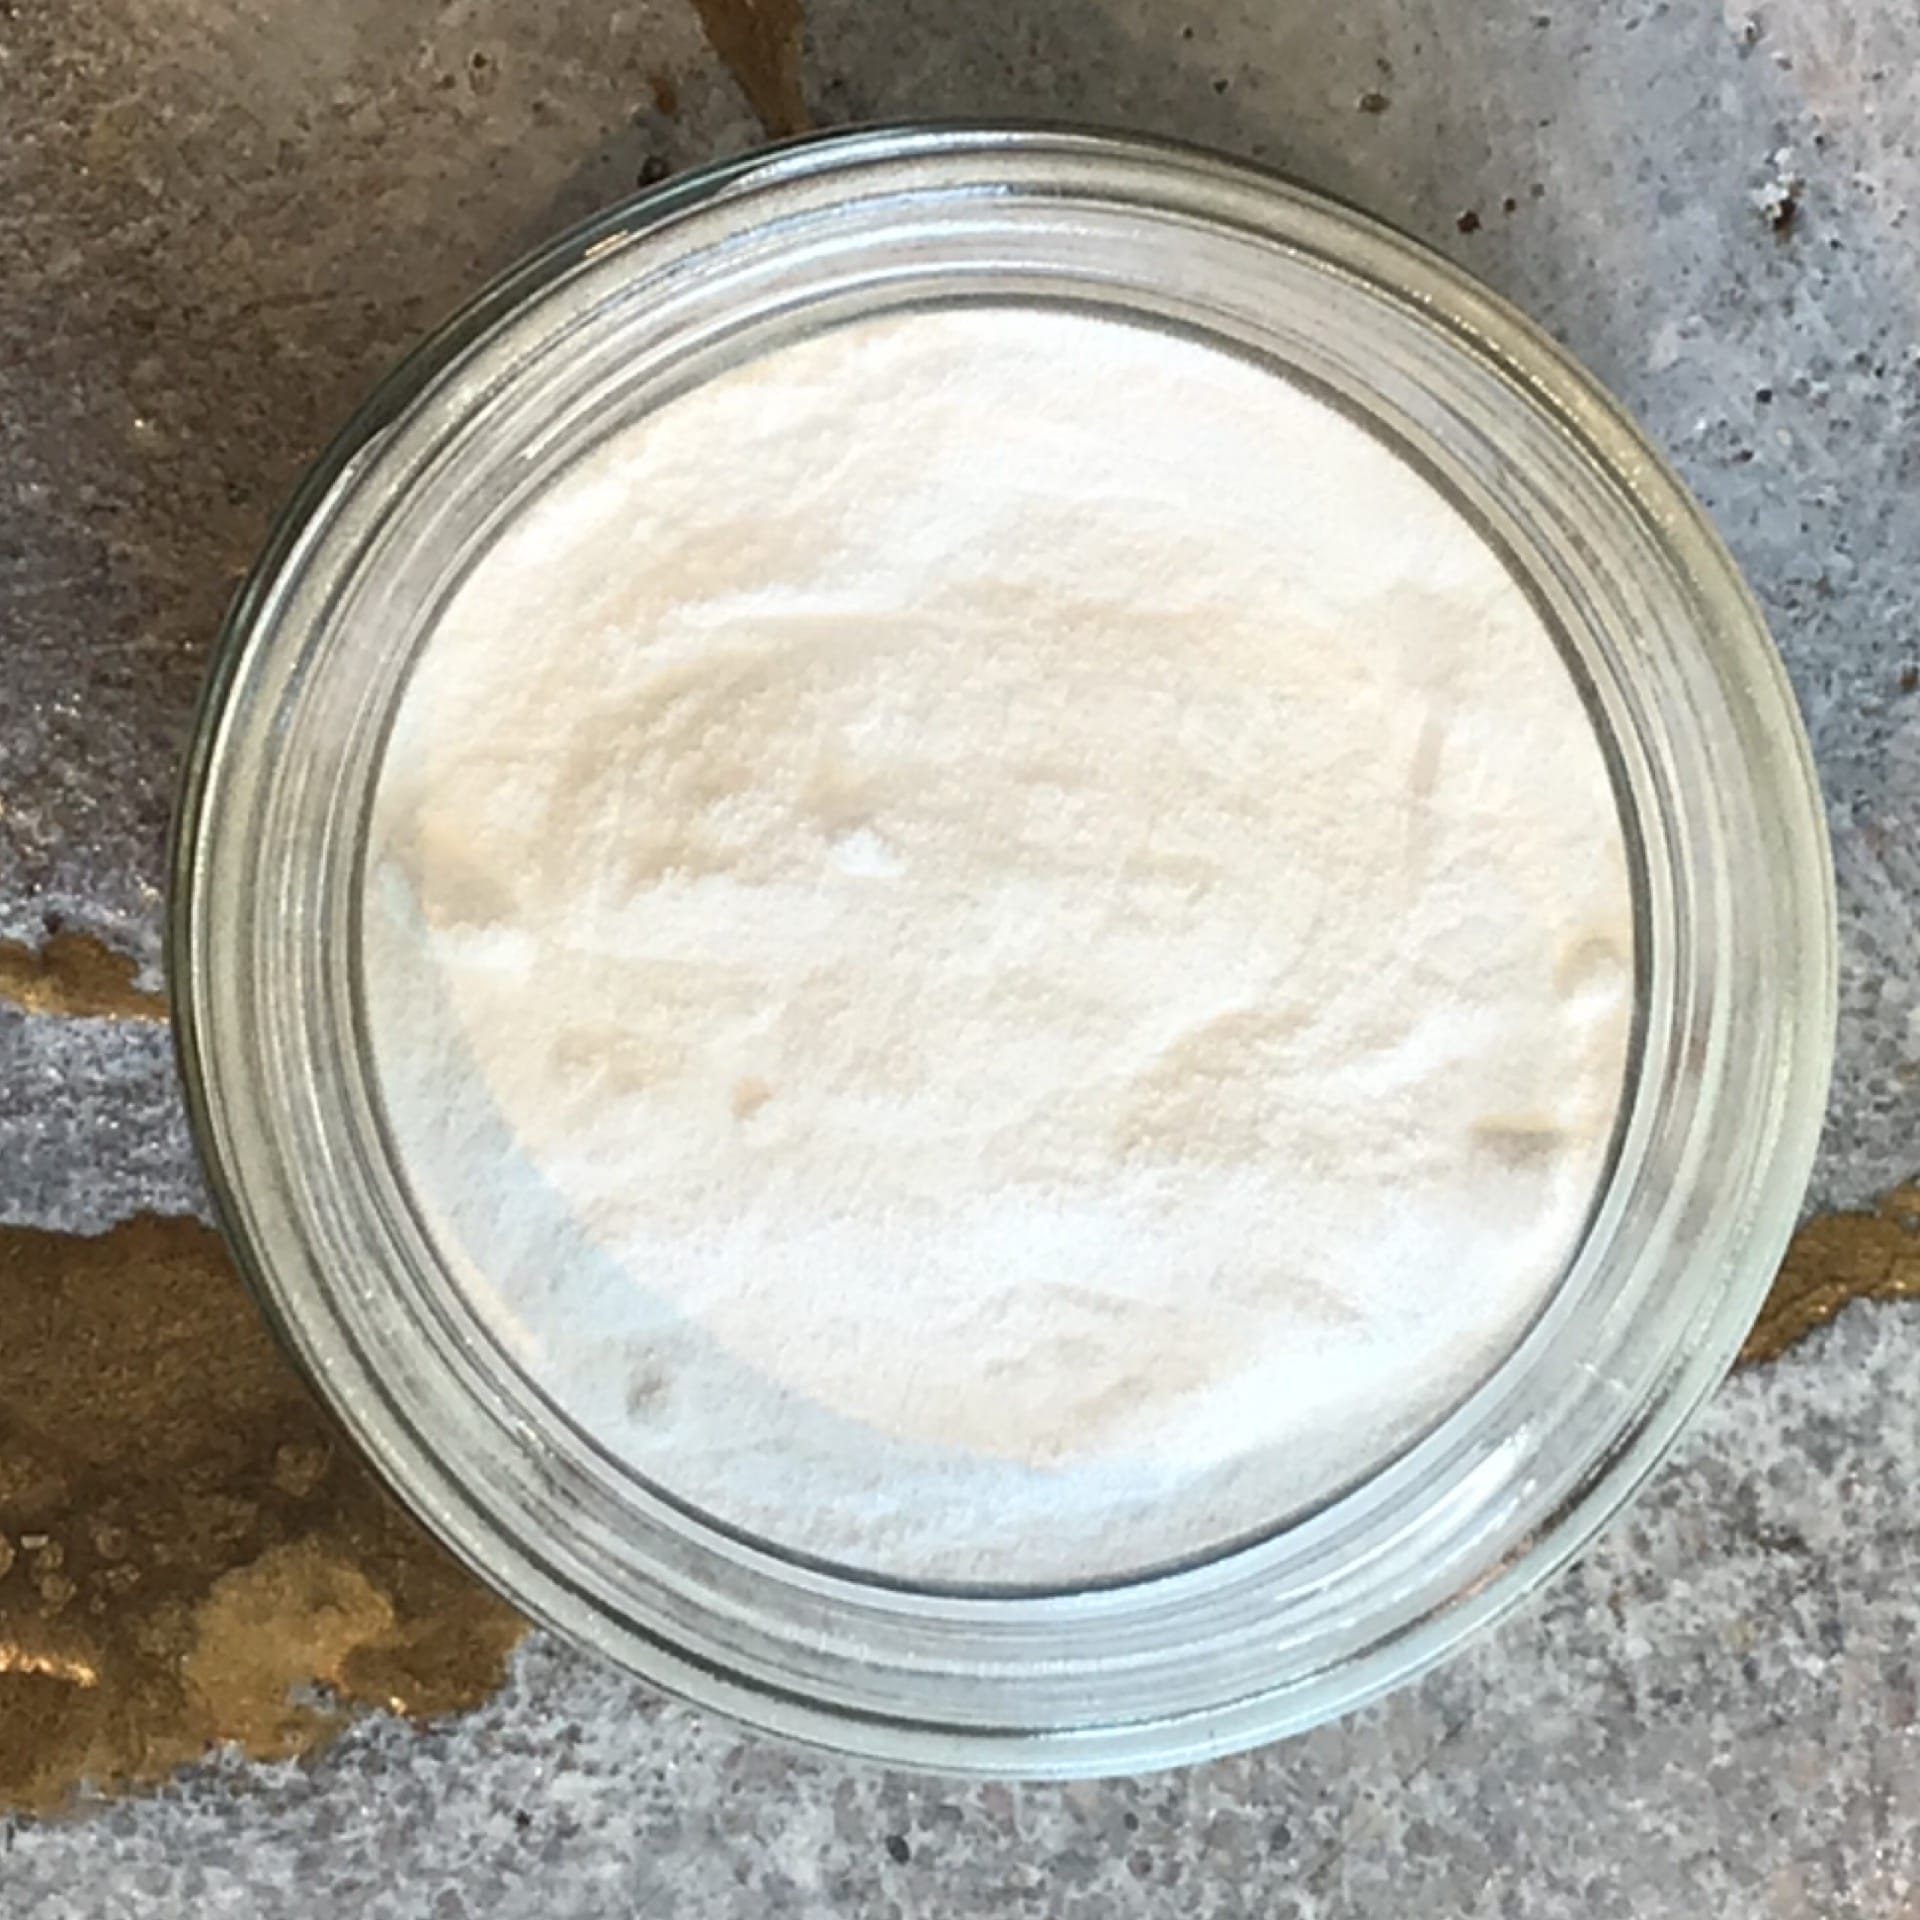 Sodium Carbonate 650 Mg (Washing Soda) White Color Solid Shape